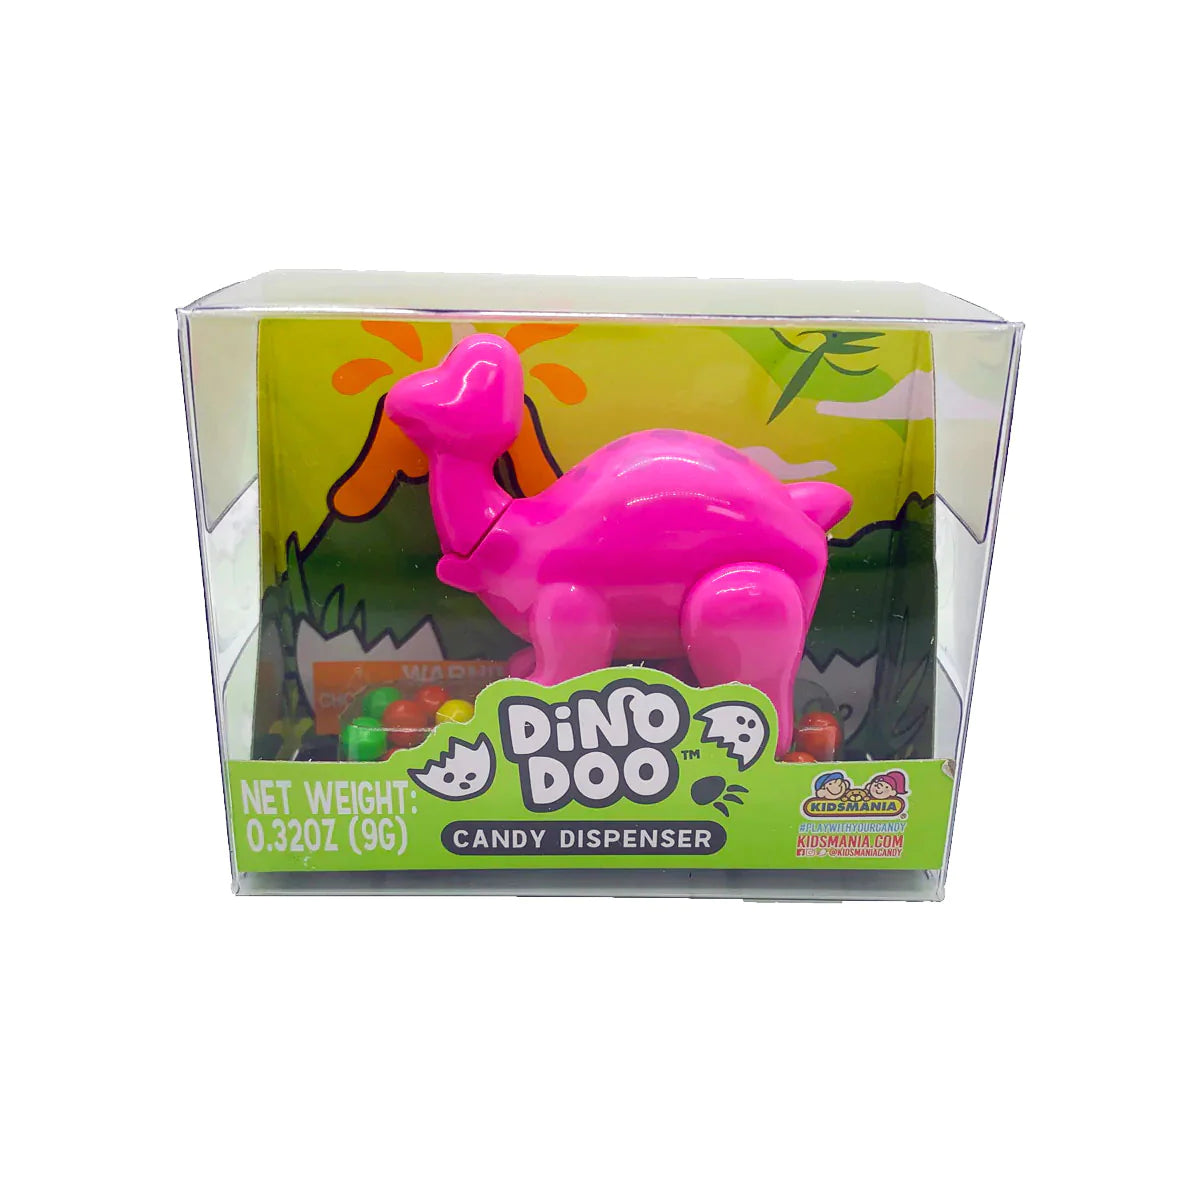 Dino Doo Candy Dispenser (1 count)